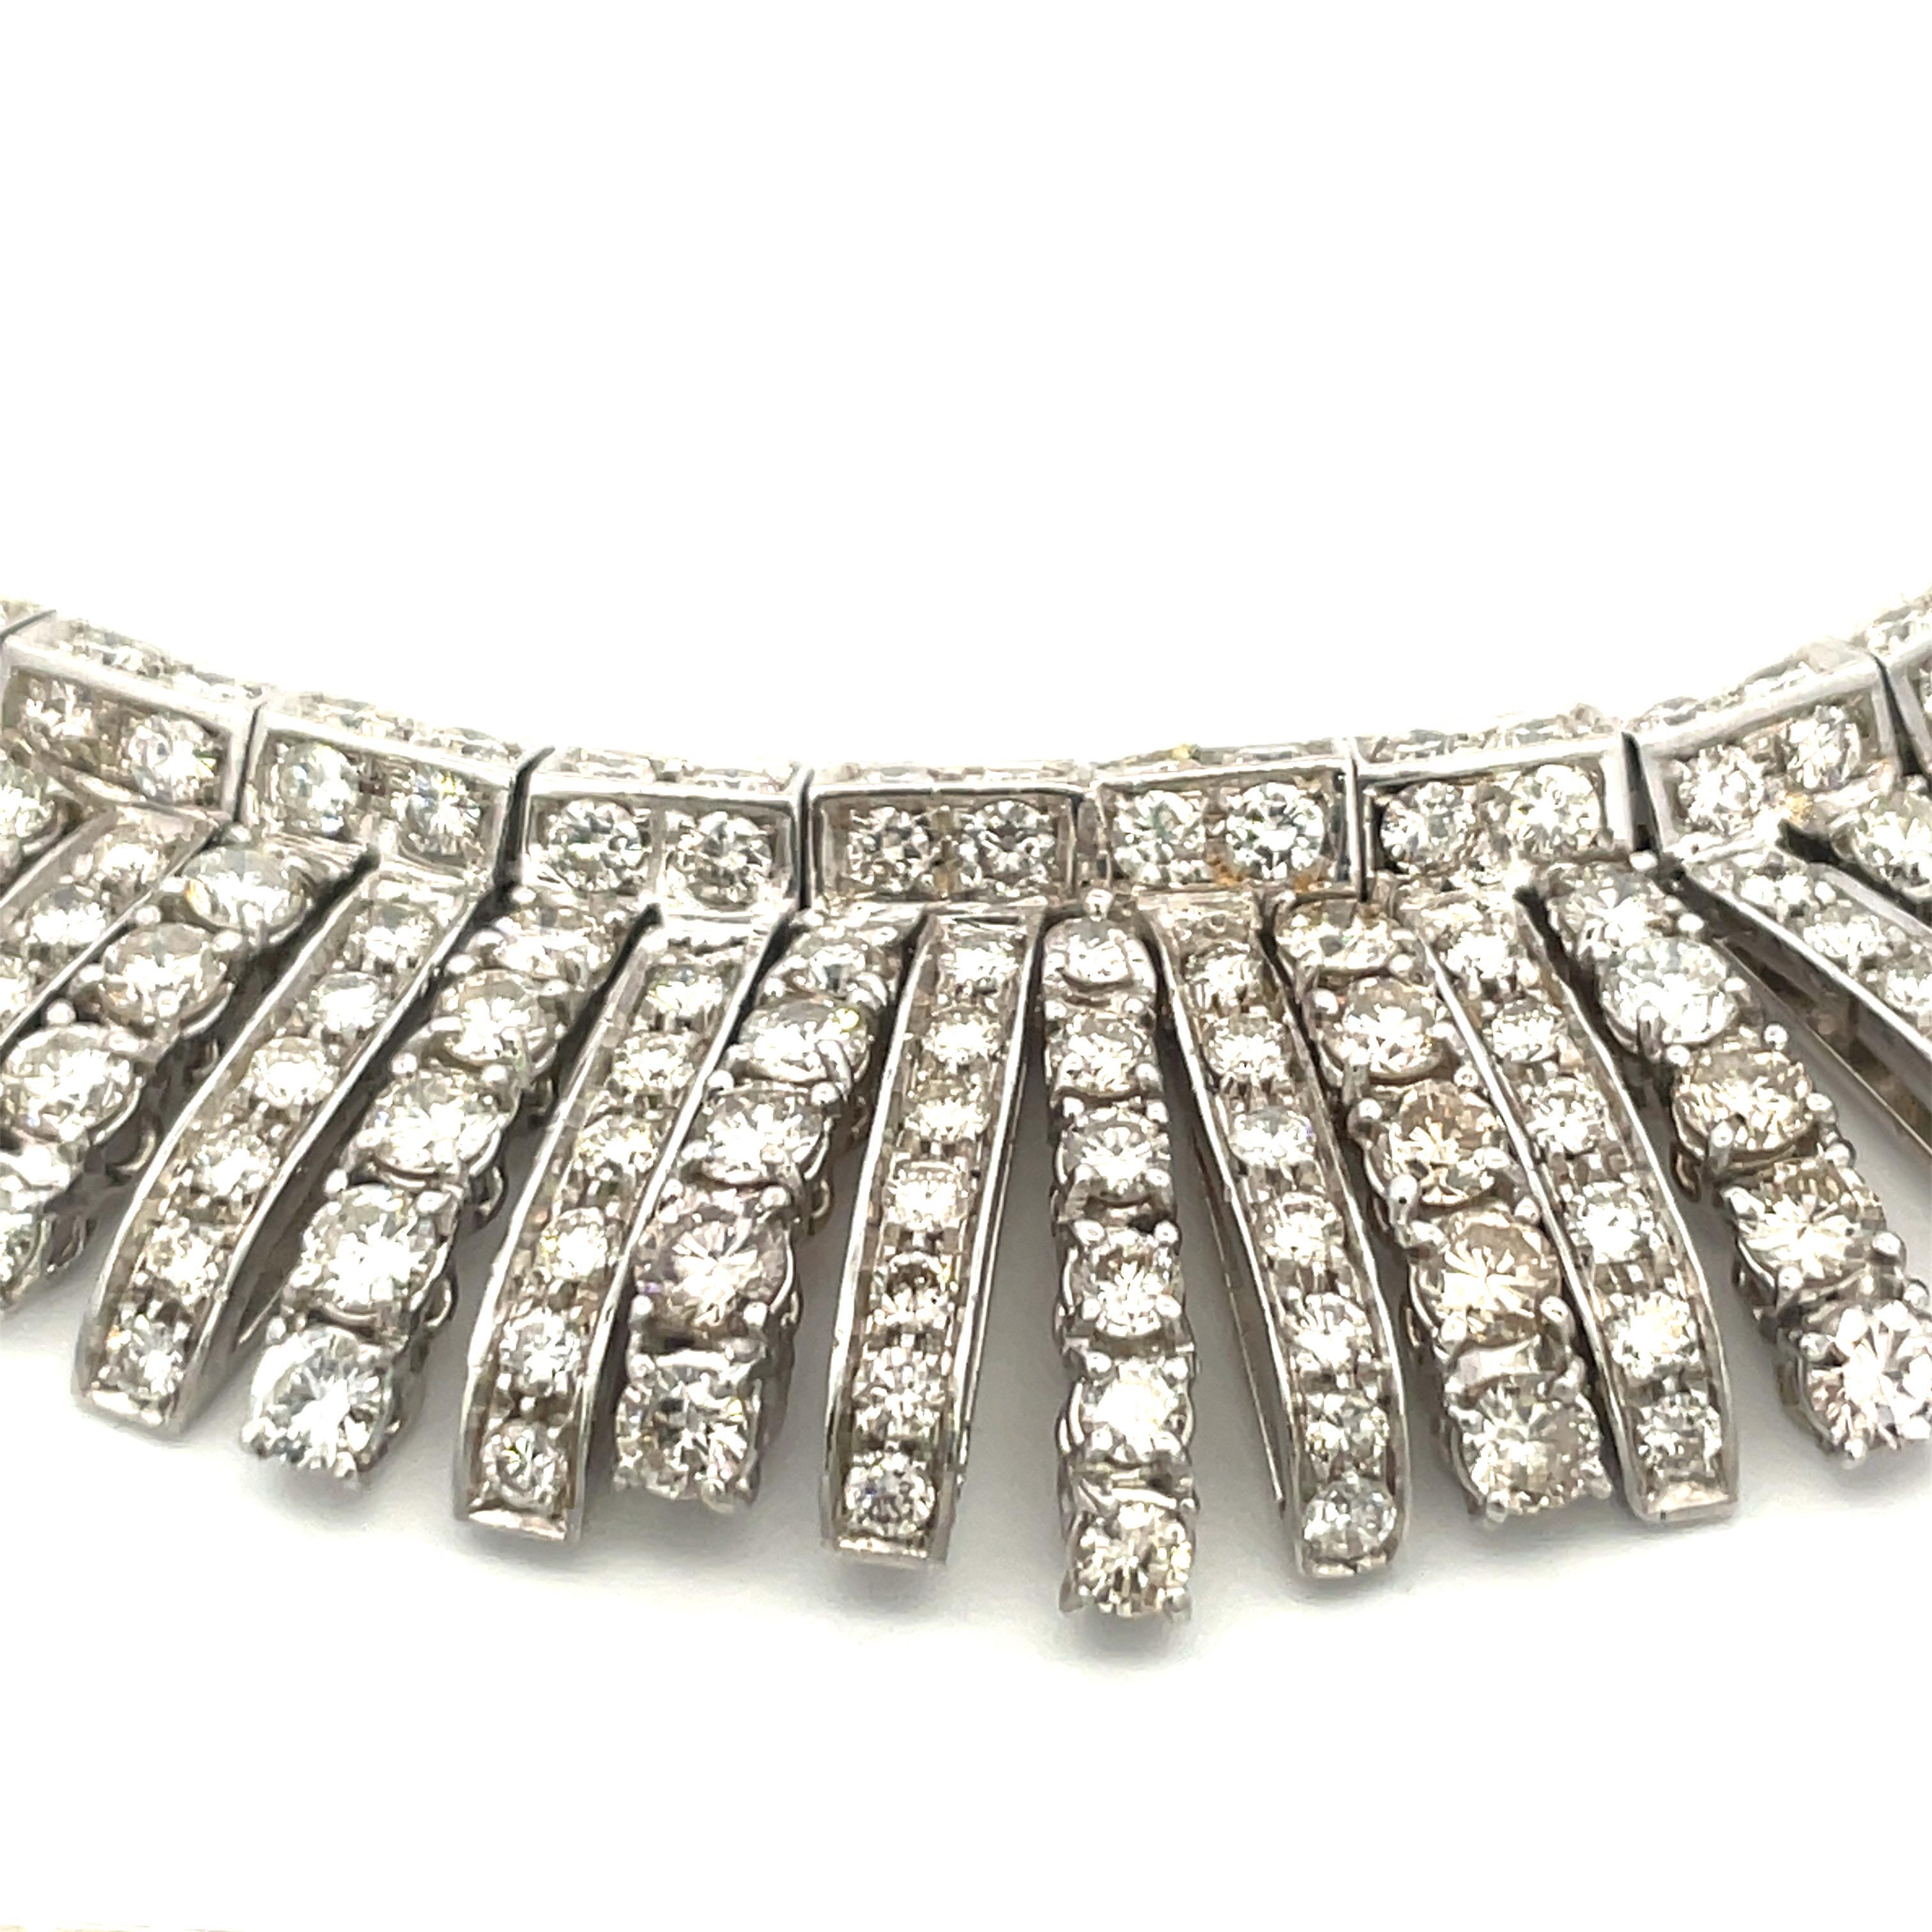 Vintage Diamond Collar Bib Necklace 66 Carats 18 Karat White Gold 113.5 Grams For Sale 2